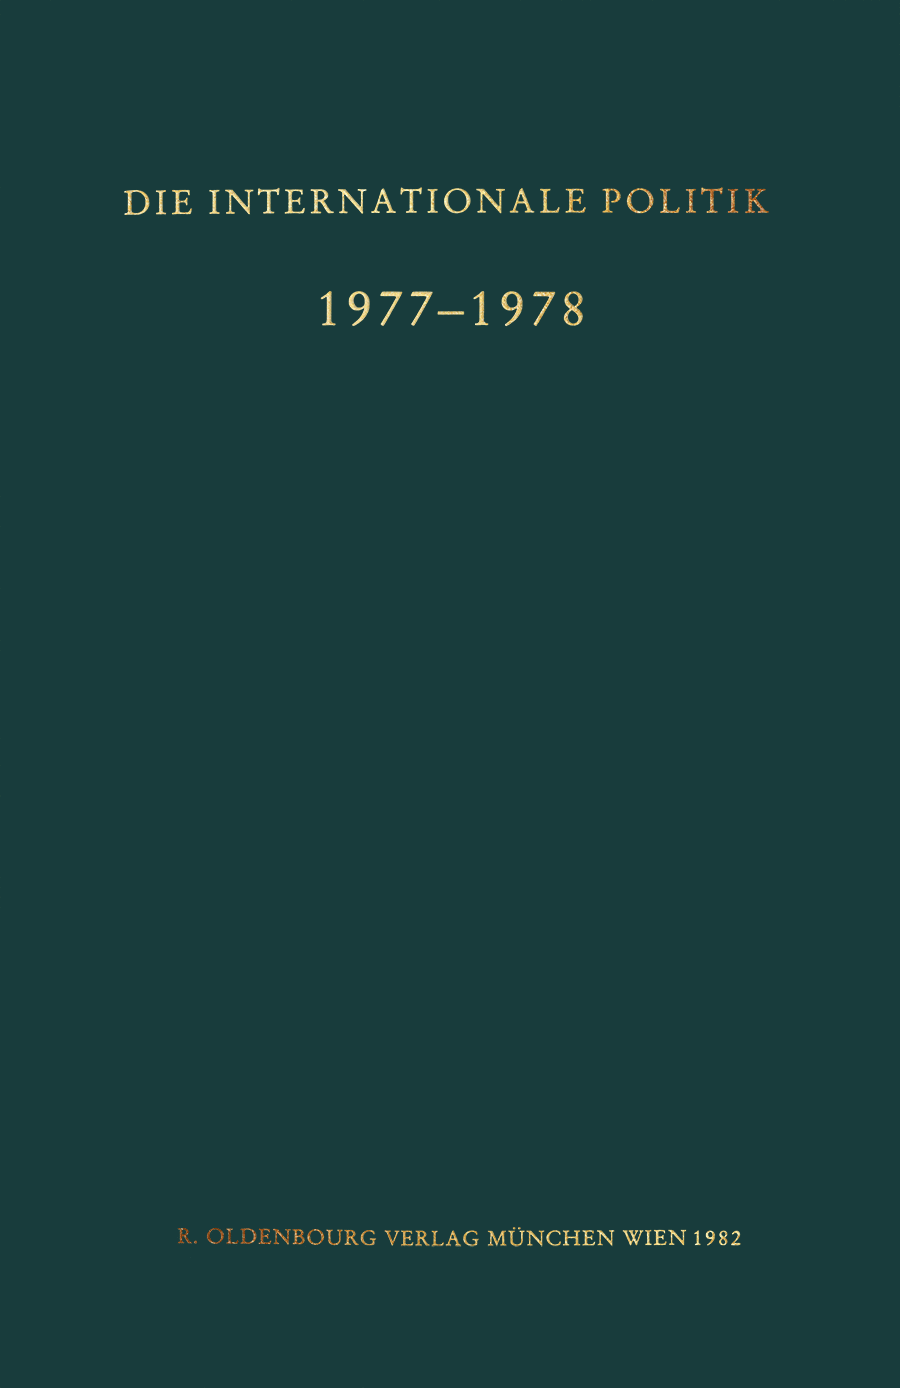 Die Internationale Politik 1977-1978, issue 1977-1978, 1982, p. 269-285;